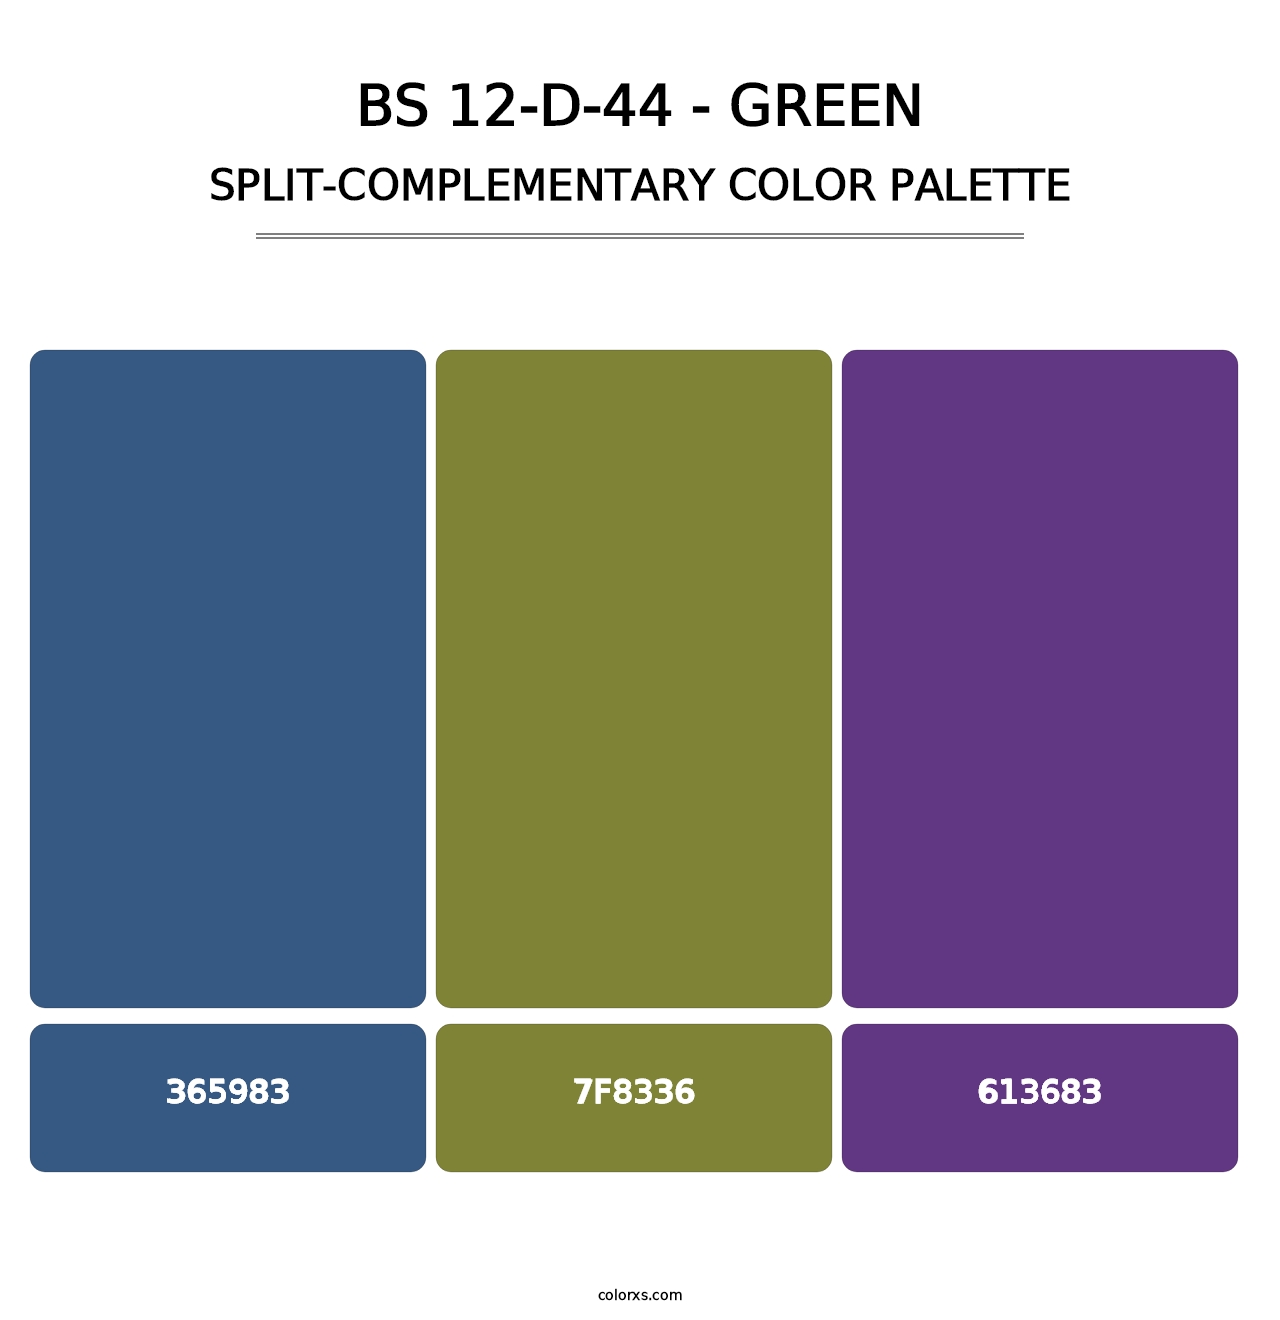 BS 12-D-44 - Green - Split-Complementary Color Palette